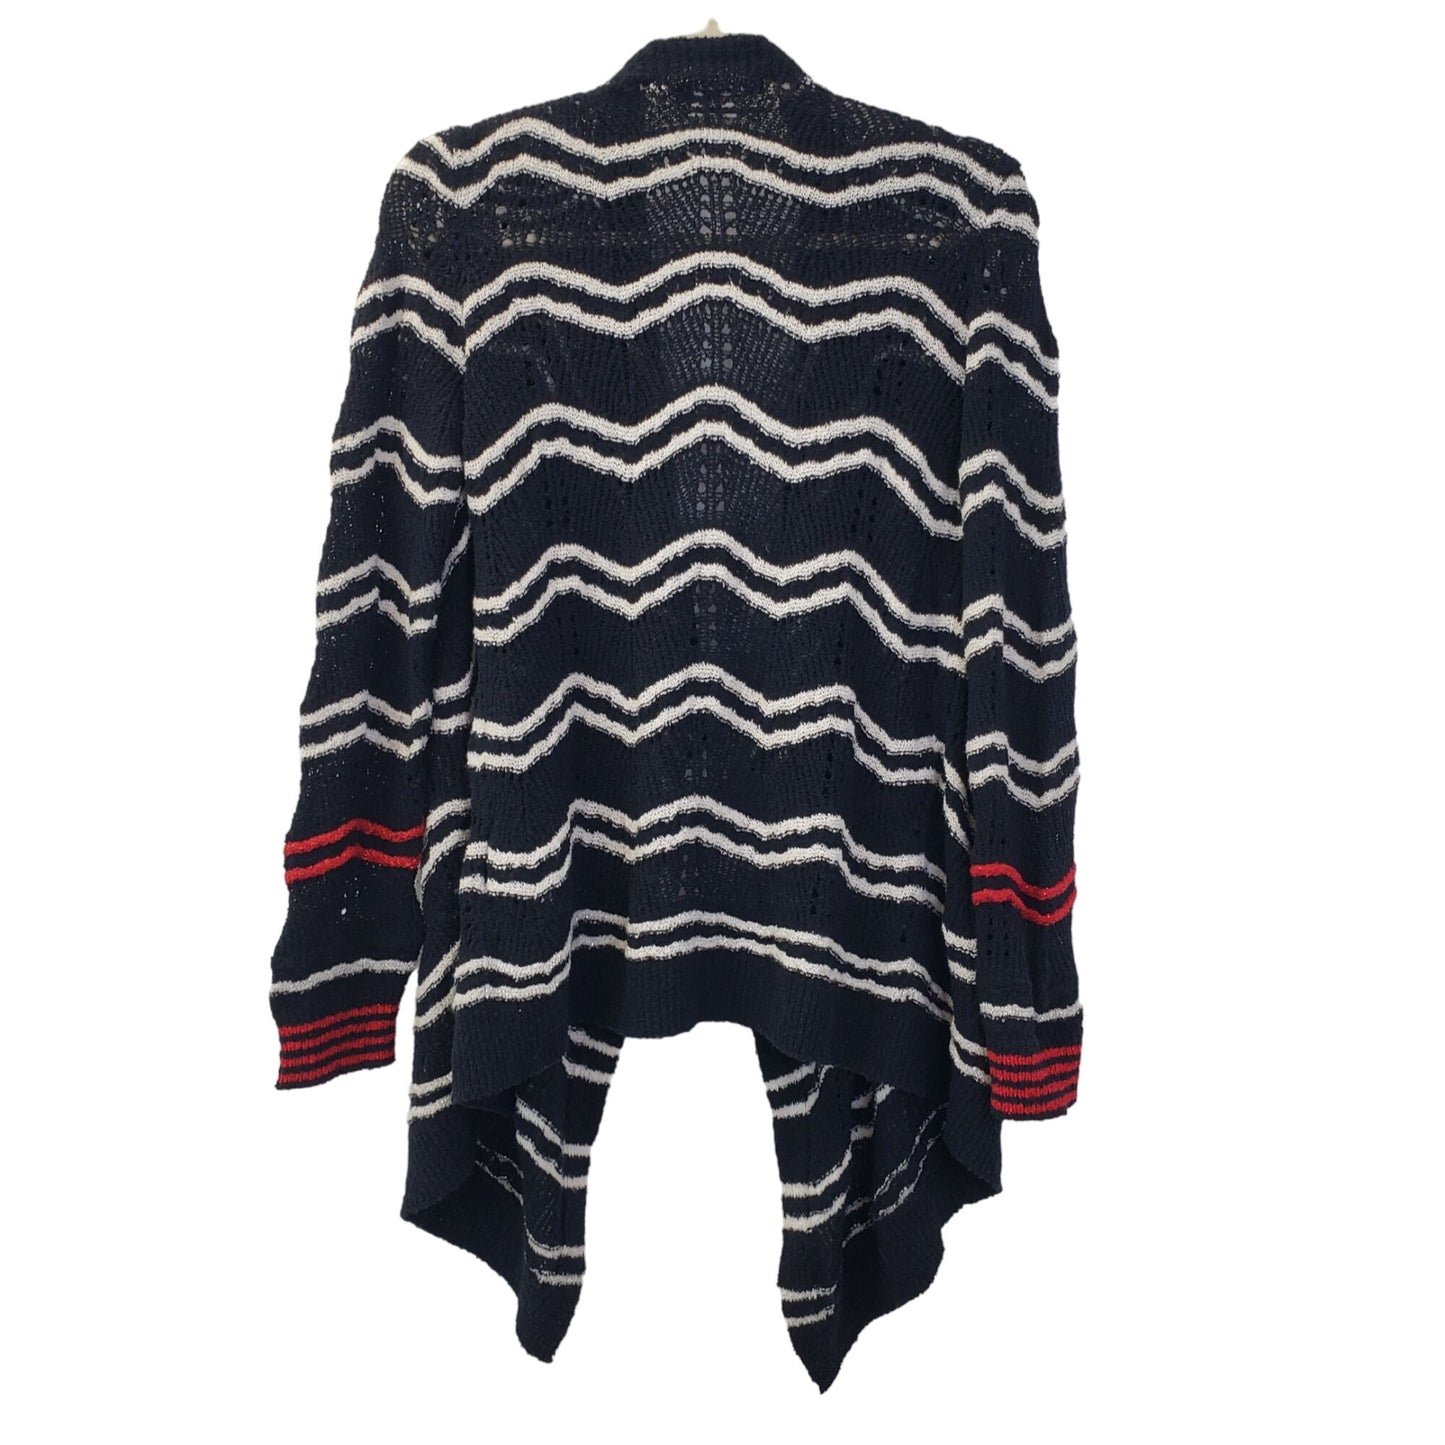 Desigual Striped Open Cardigan Sweater Size Small